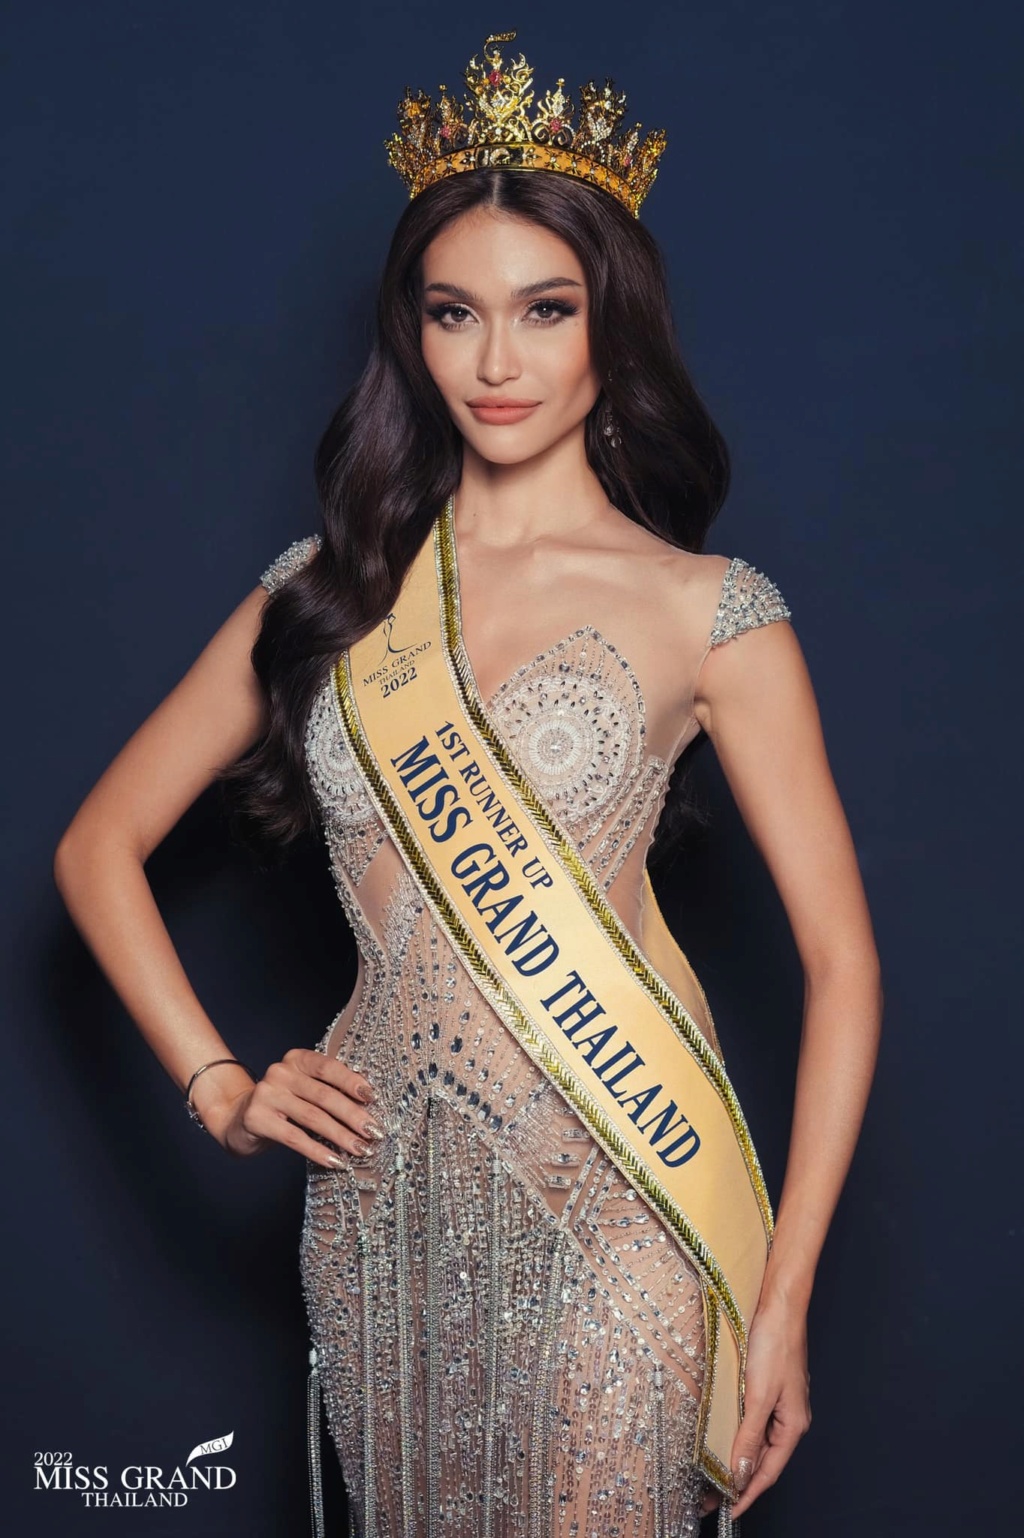 Miss Grand International Thailand 2022 is Bangkok 27895914